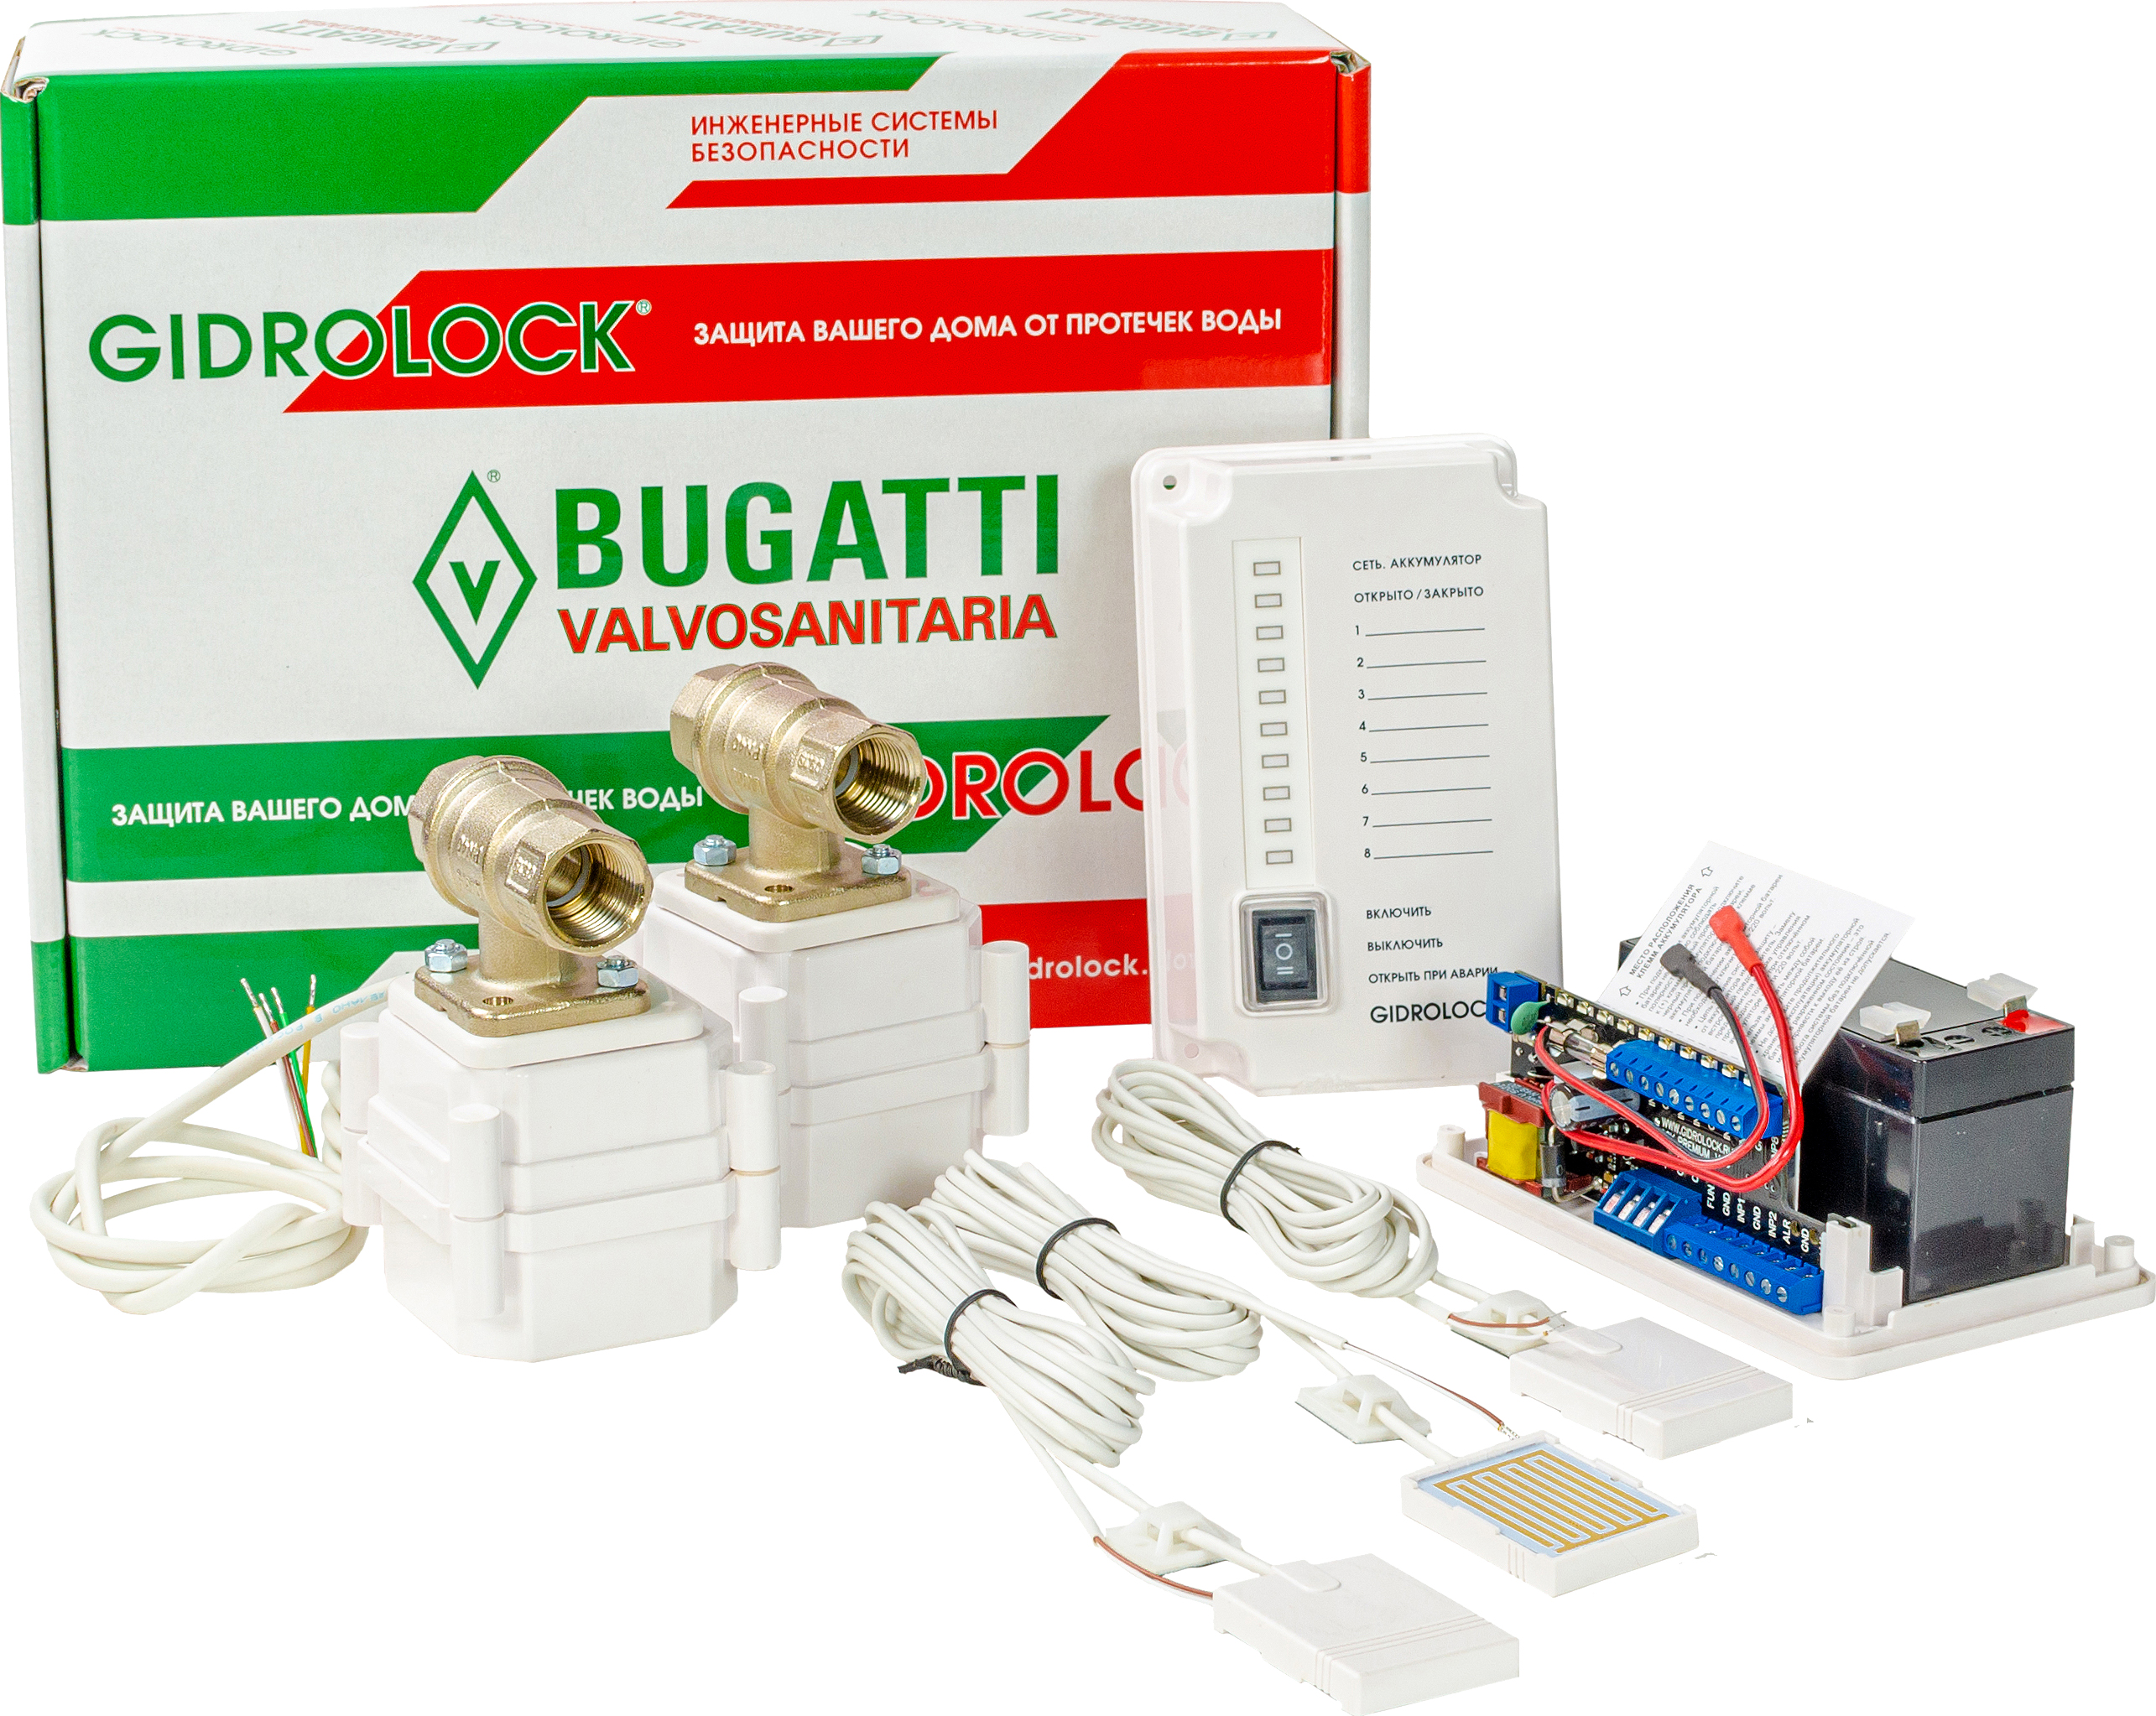 Система защиты от протечек Gidrolock Premium Bugatti 1/2